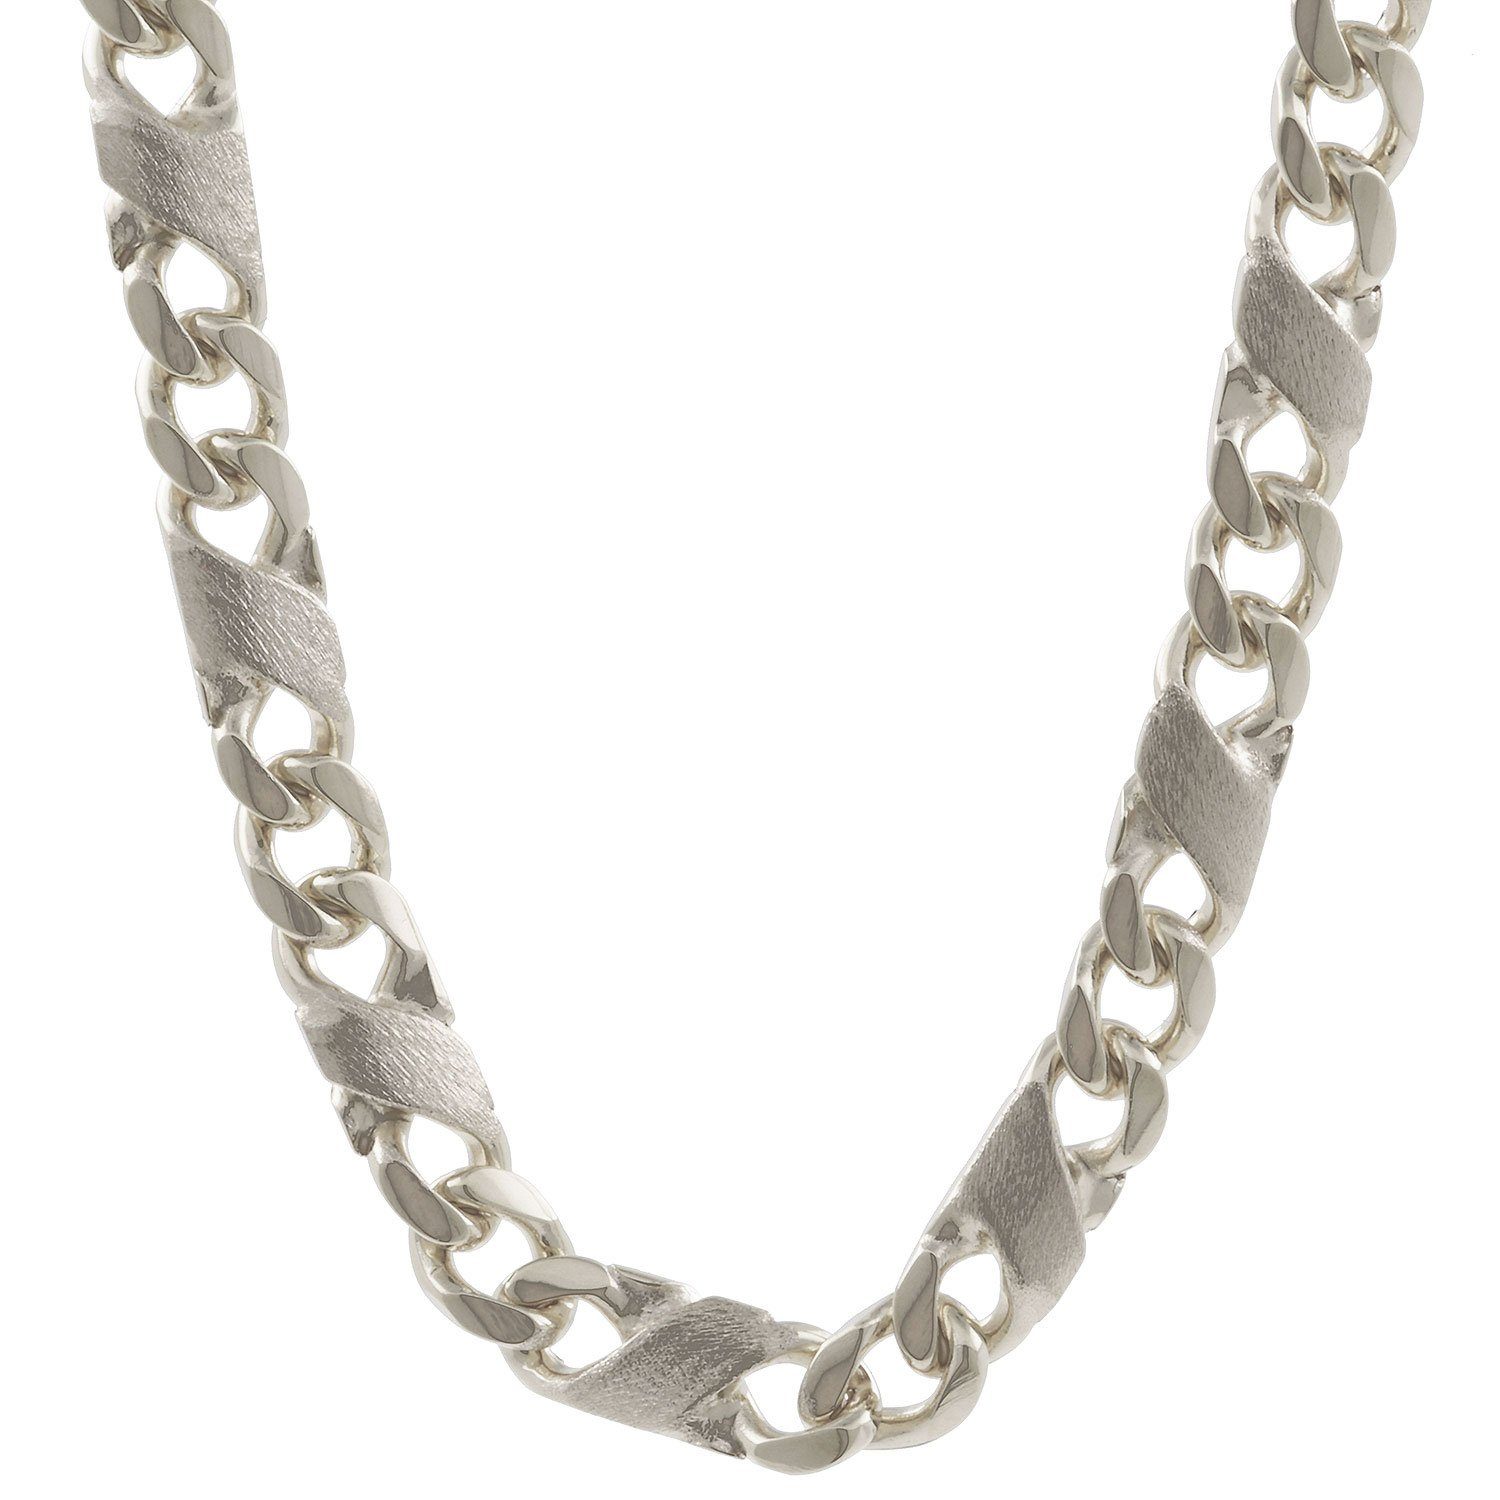 HOPLO Silberkette Dollar Kette Halskette - Legierung 925 Sterlingsilber -  Kettenbreite 5,4 mm - Kettenlänge 45 cm, Made in Germany